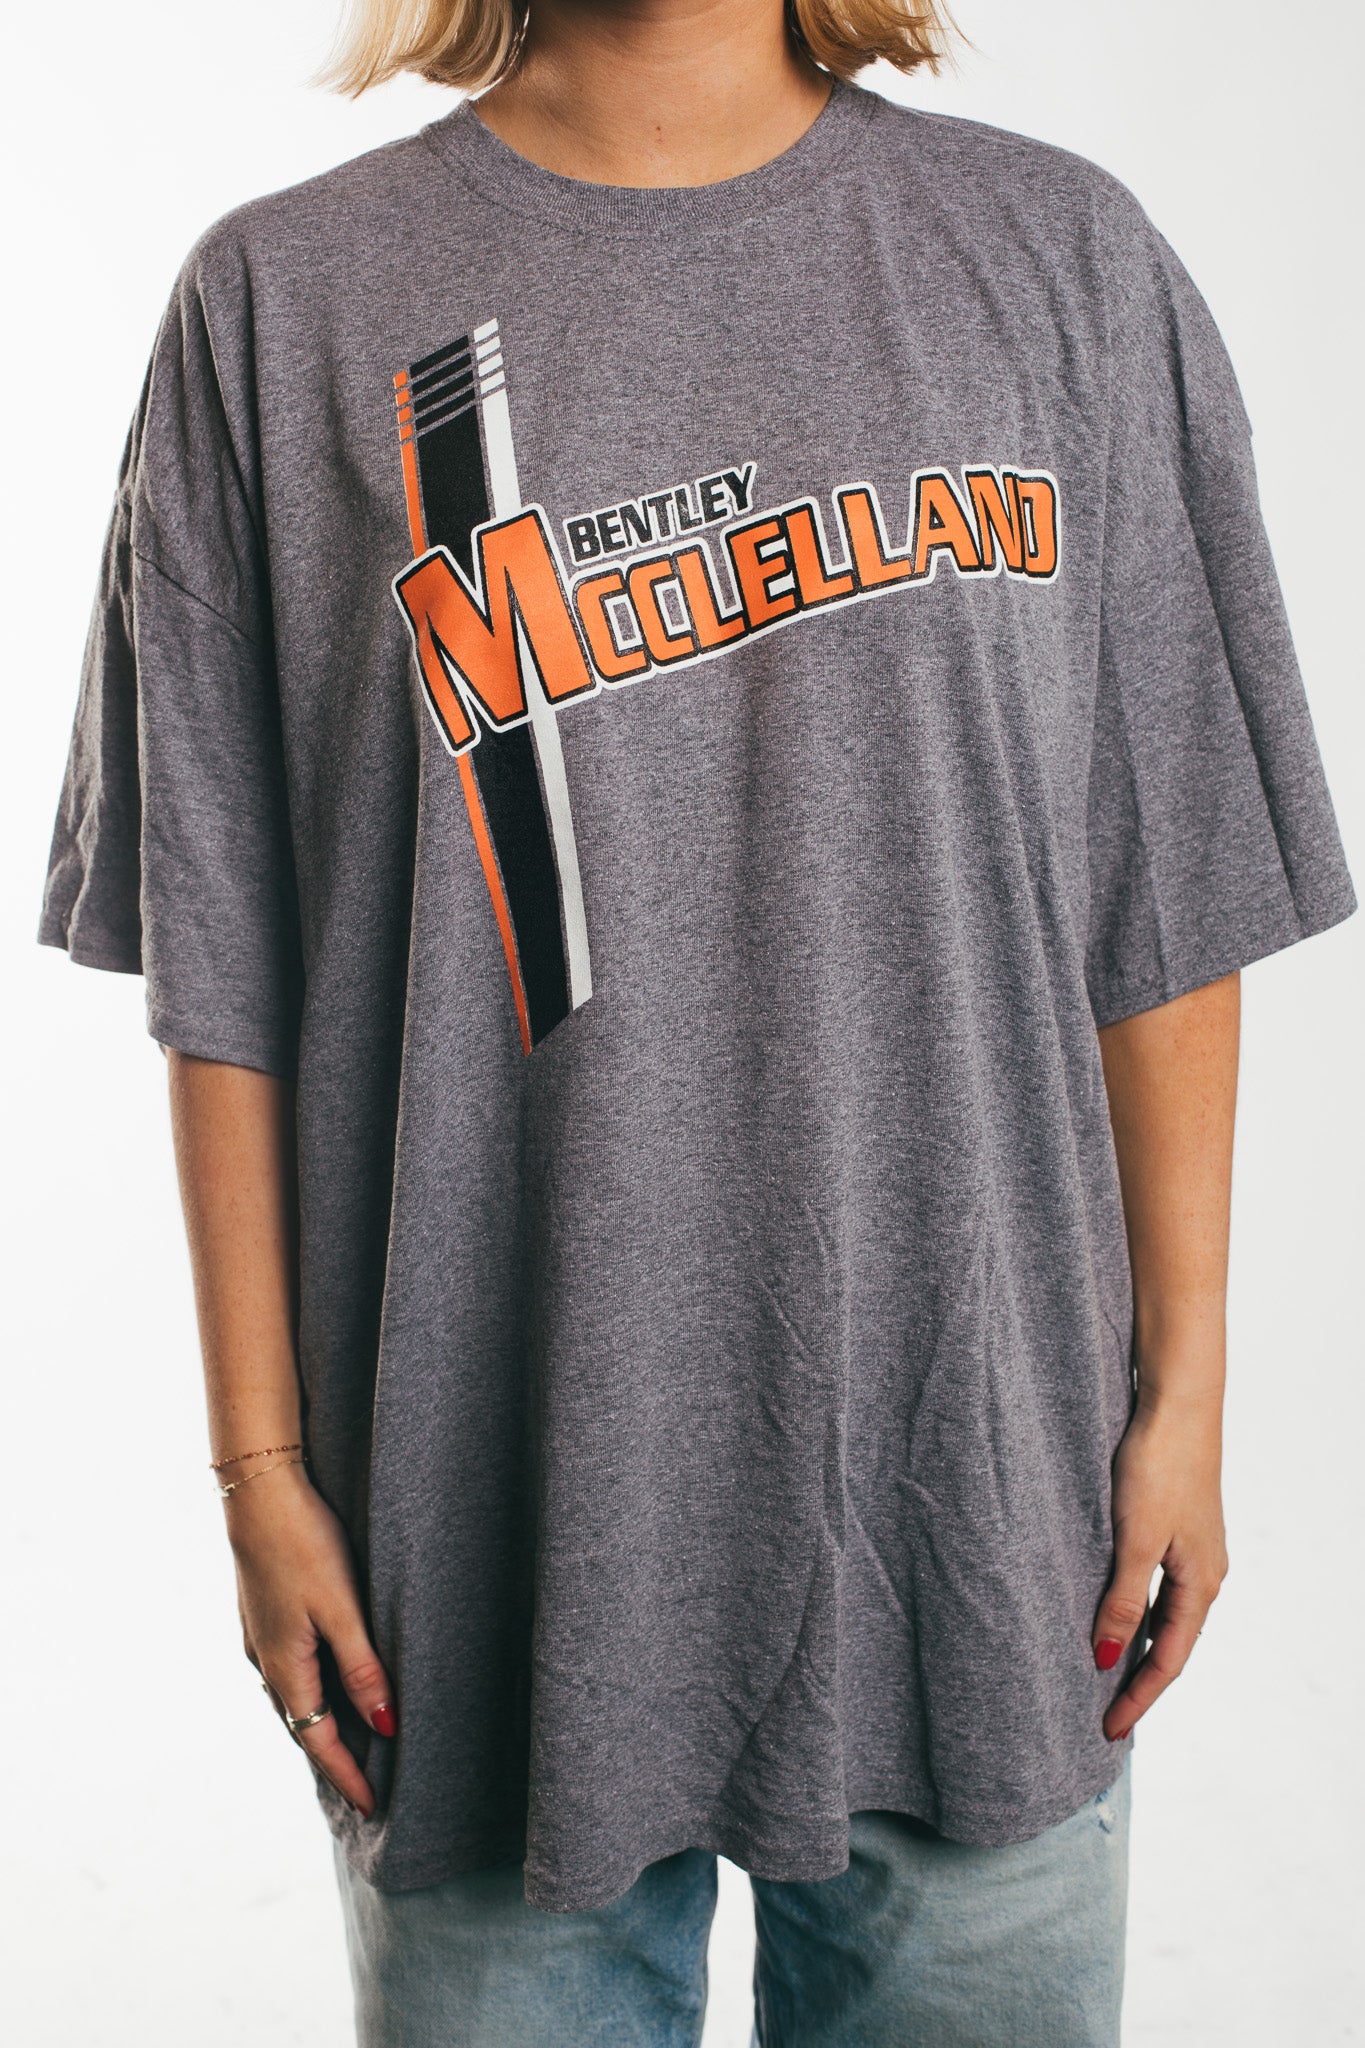 Bentley McClellan  - T-Shirt (XXL)